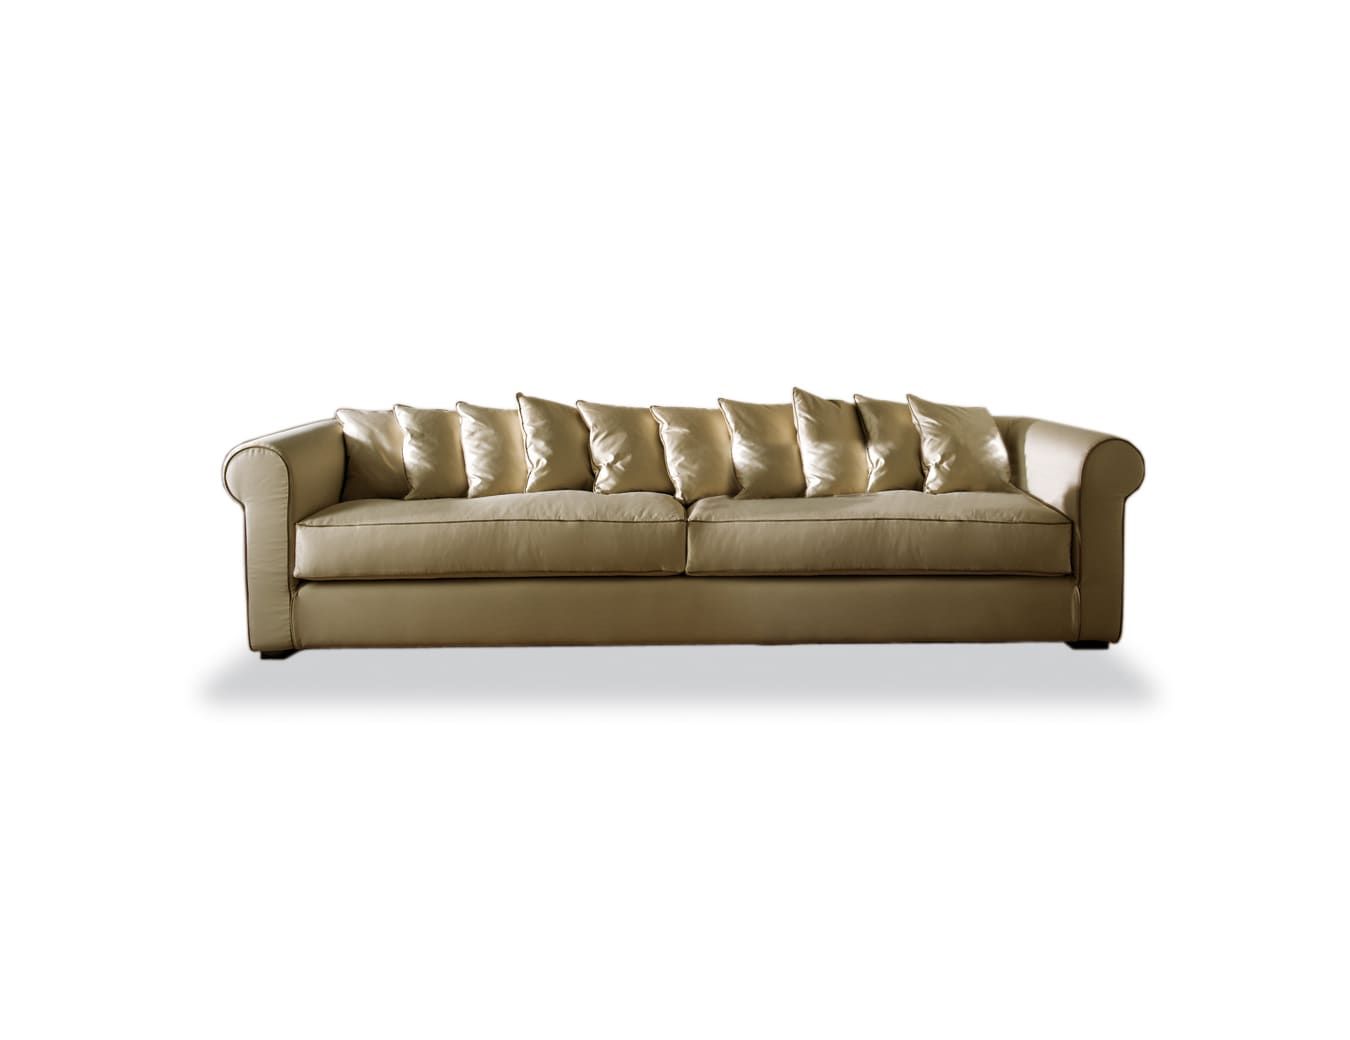 Gimmy modern Italian sofa chair with beige fabric